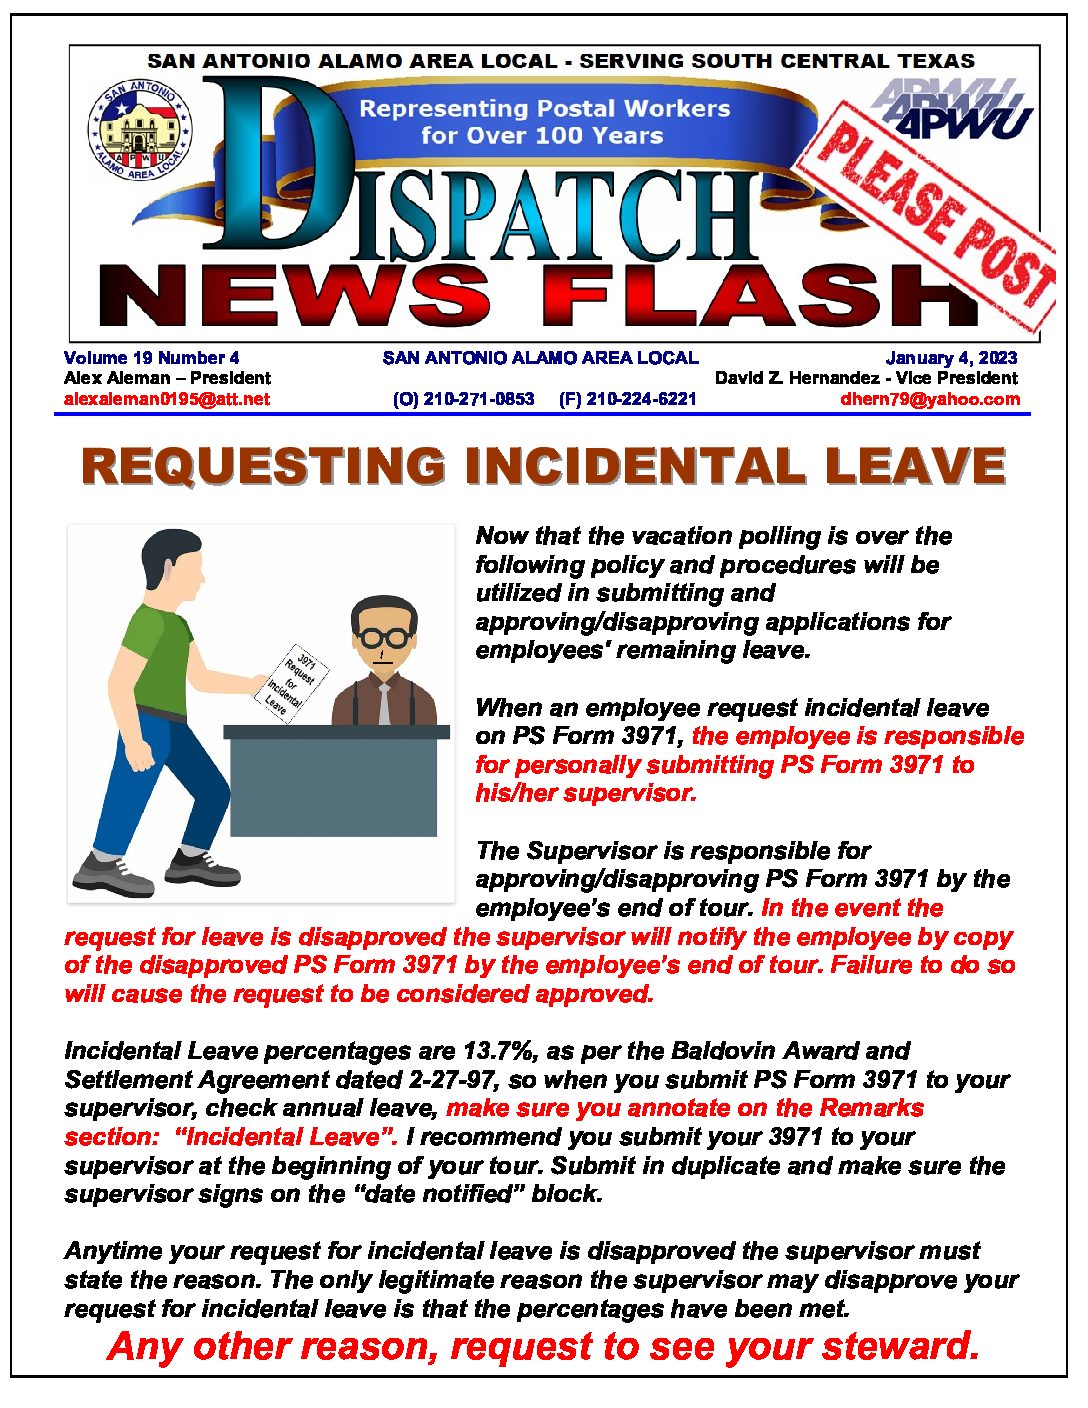 NewsFlash 19-4 – Requesting Incidental Leave - 